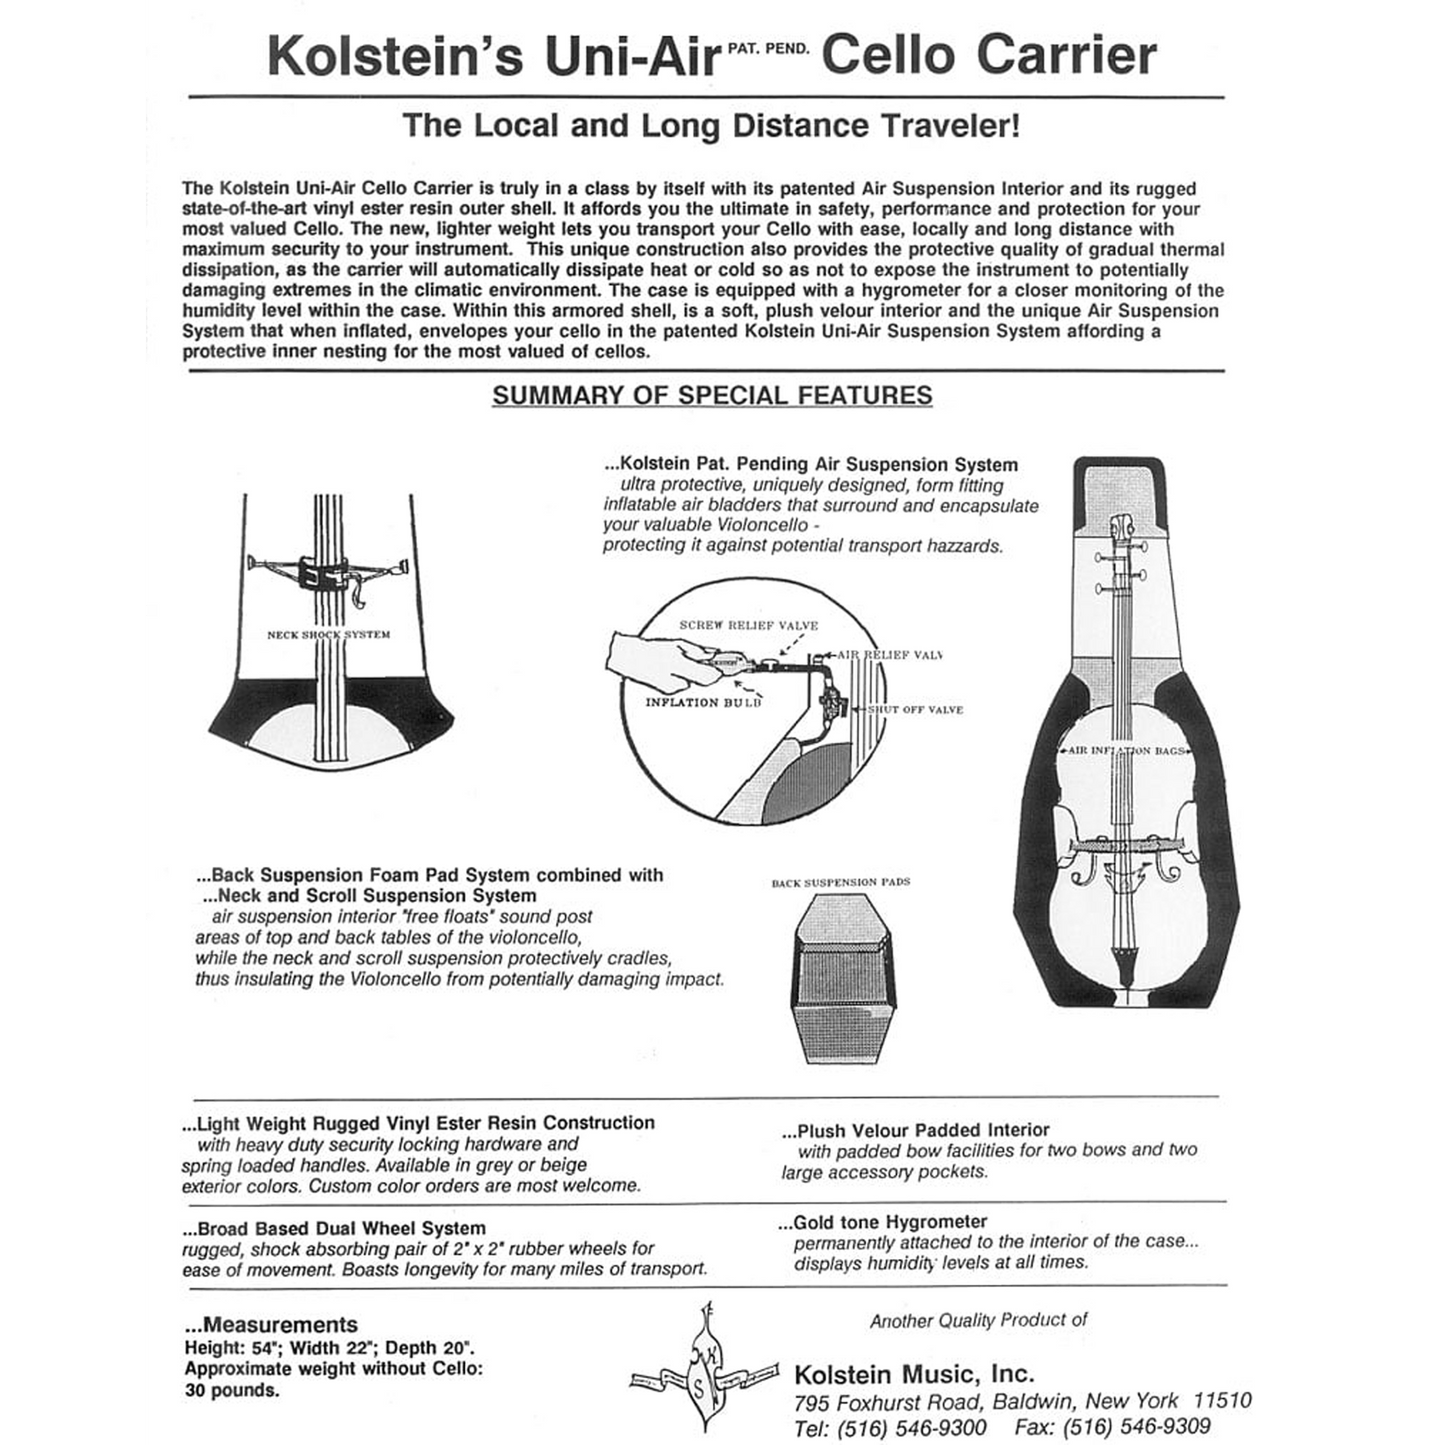 Kolsteins™ Airline Friendly Uni-Air Cello Carrier